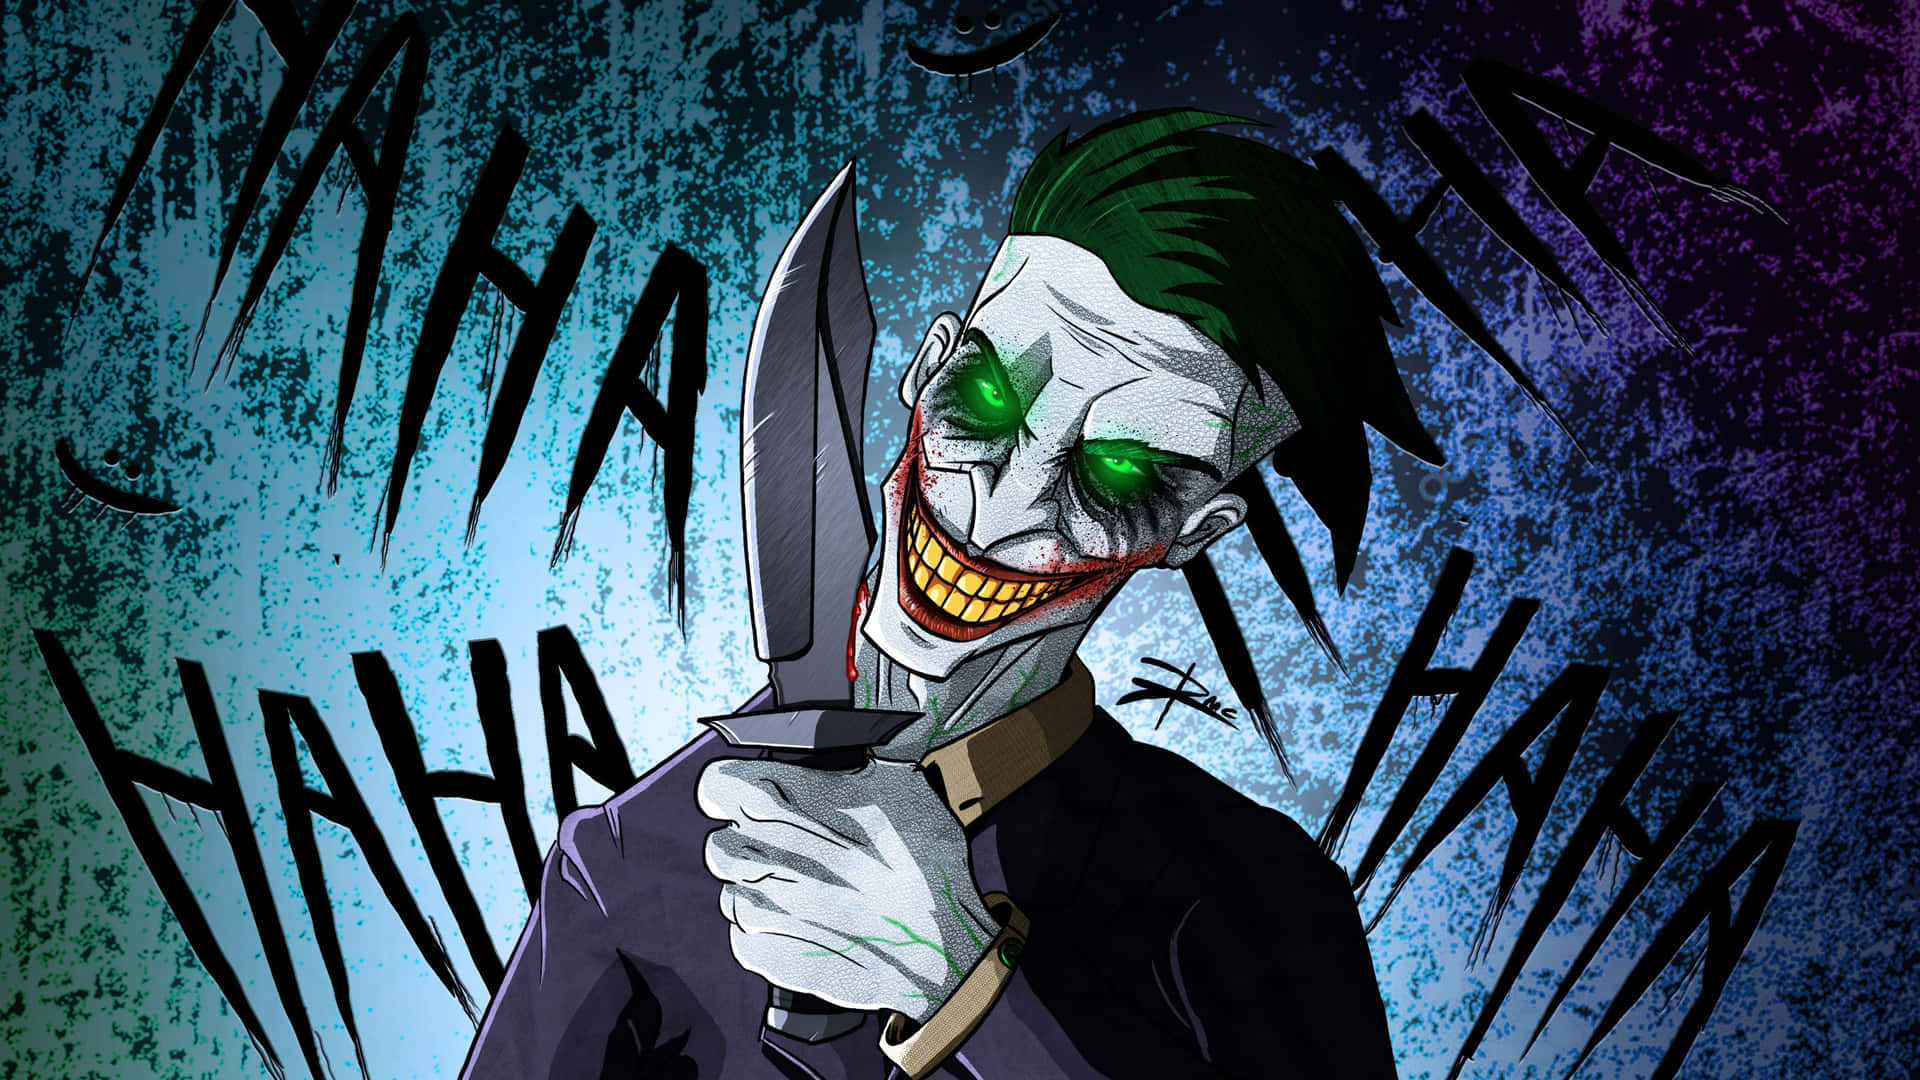 Free Cool Joker Wallpaper Downloads, [100+] Cool Joker Wallpapers for FREE  